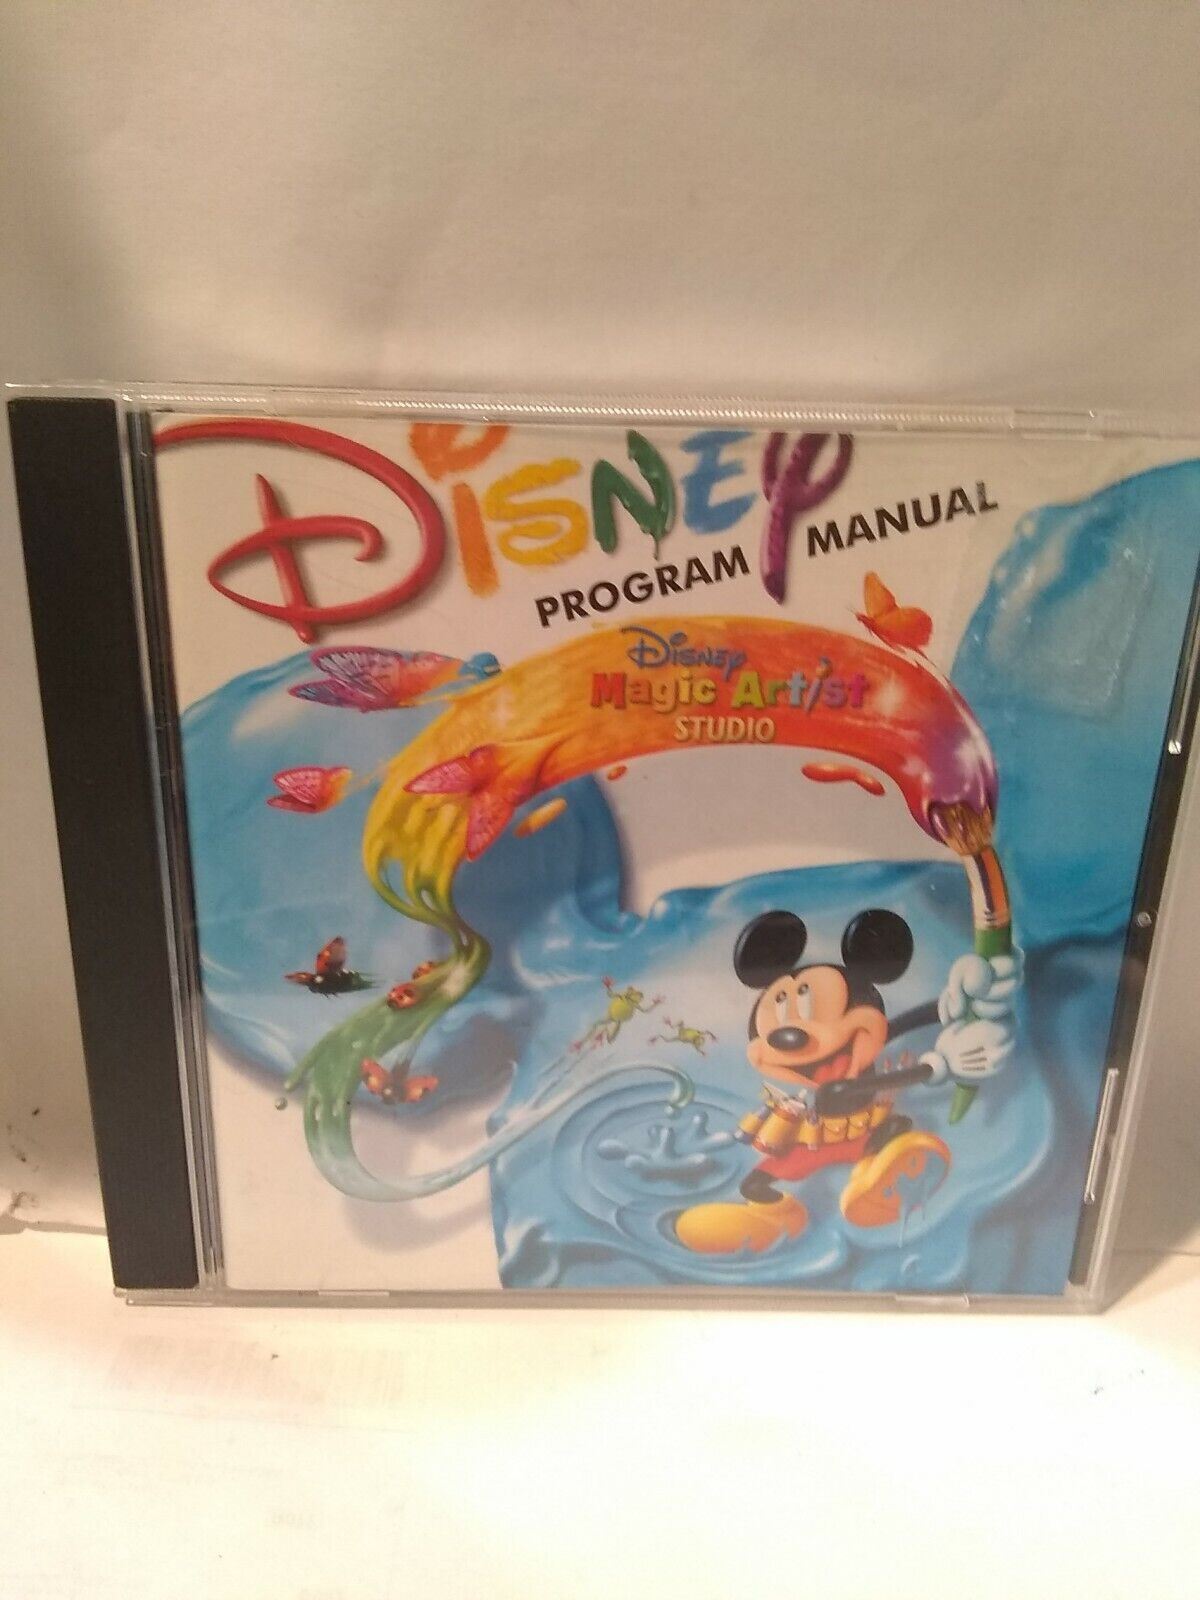 Disney Magic Artist Studio PC Computer Walt Disney's Mickey Mouse Creativity Fun